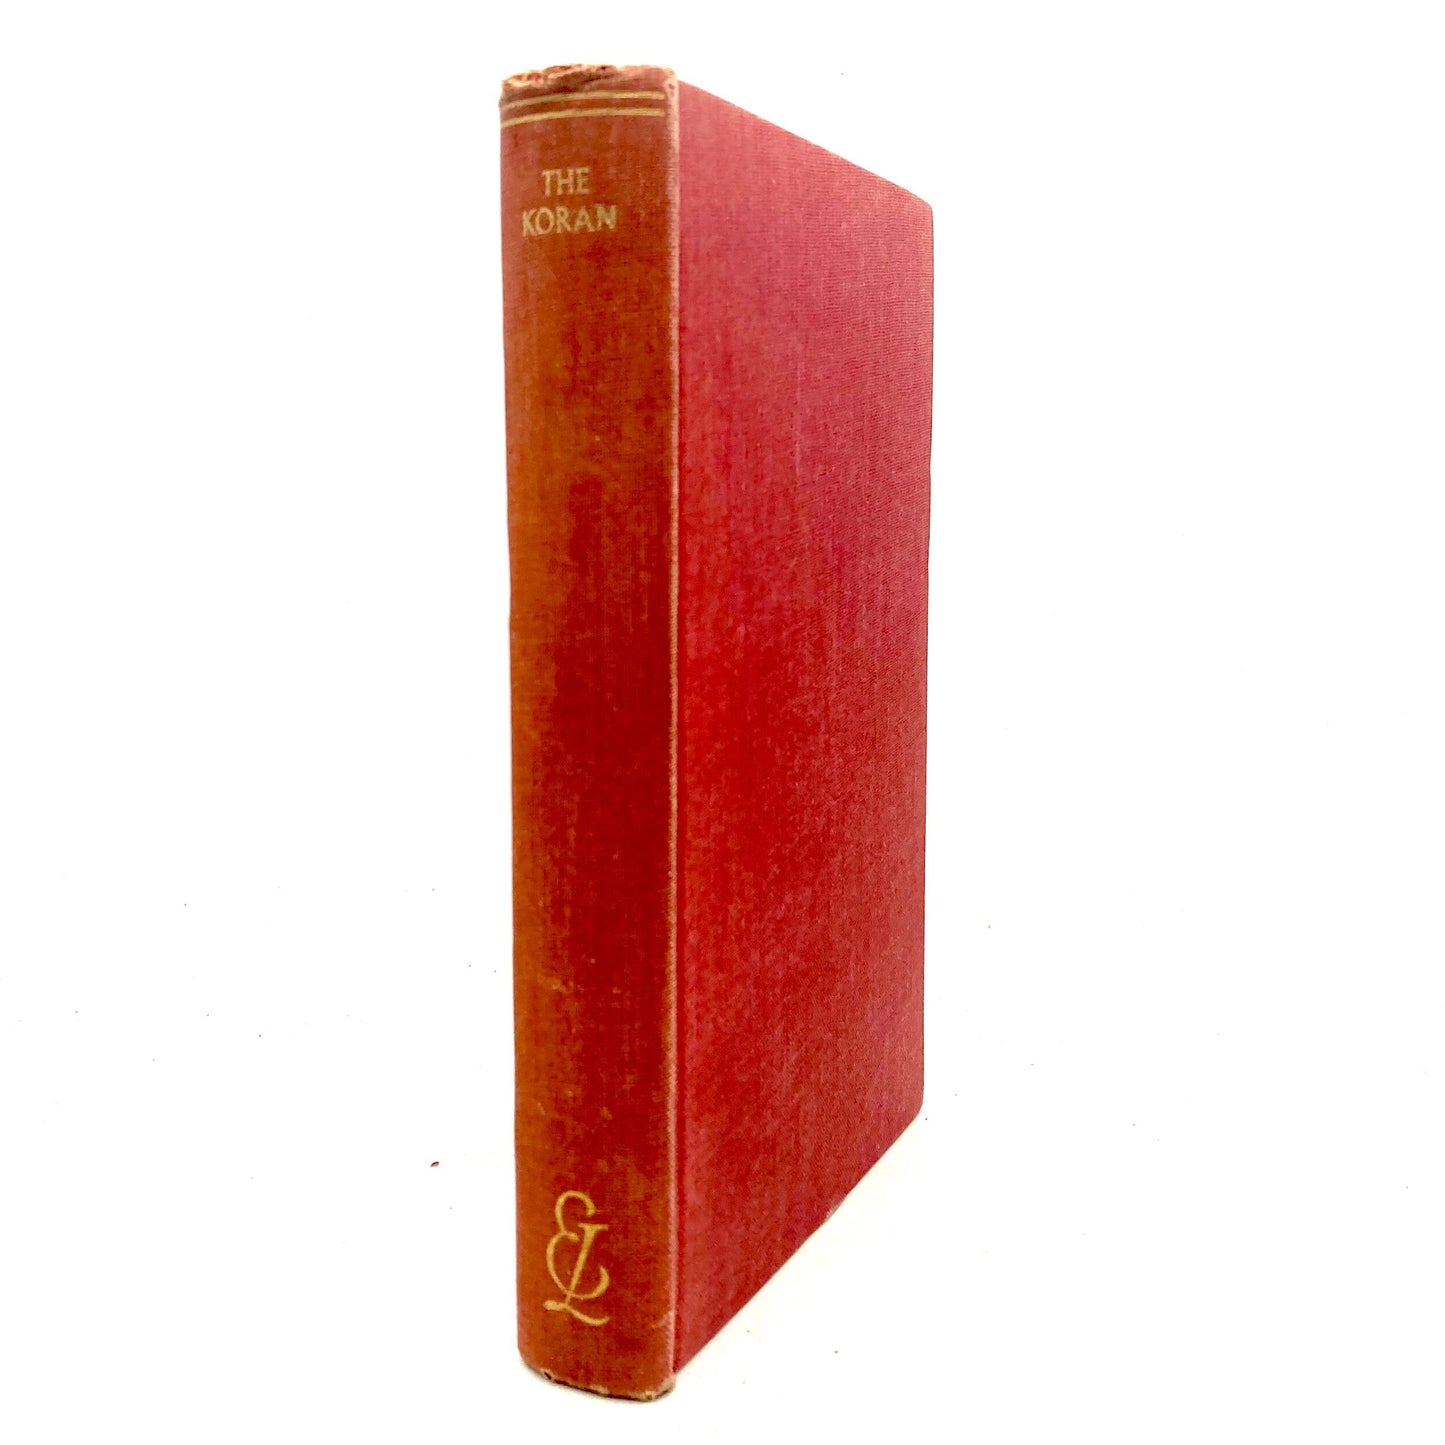 RODWELL, J.M. (Translator) "The Koran" [J.M. Dent, 1953] - Buzz Bookstore